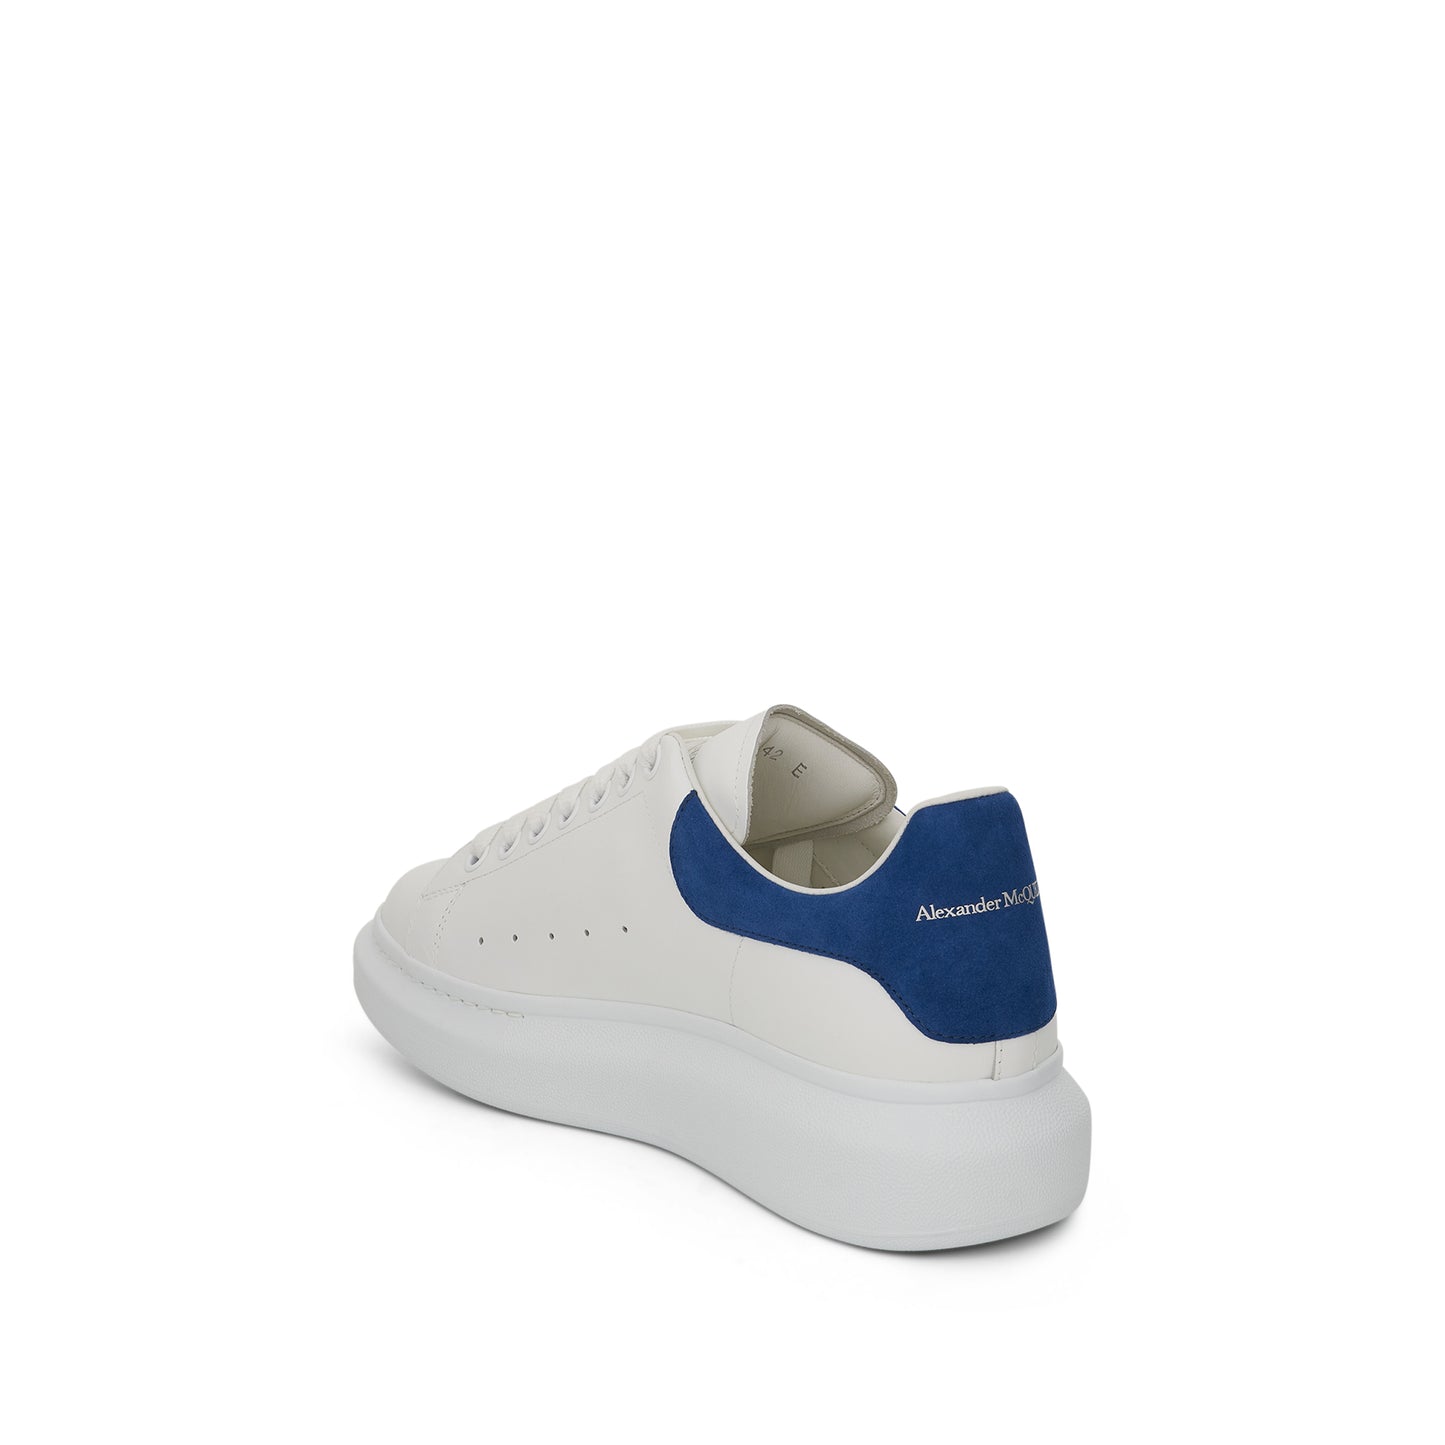 Larry Oversized Sneaker in White/Paris Blue